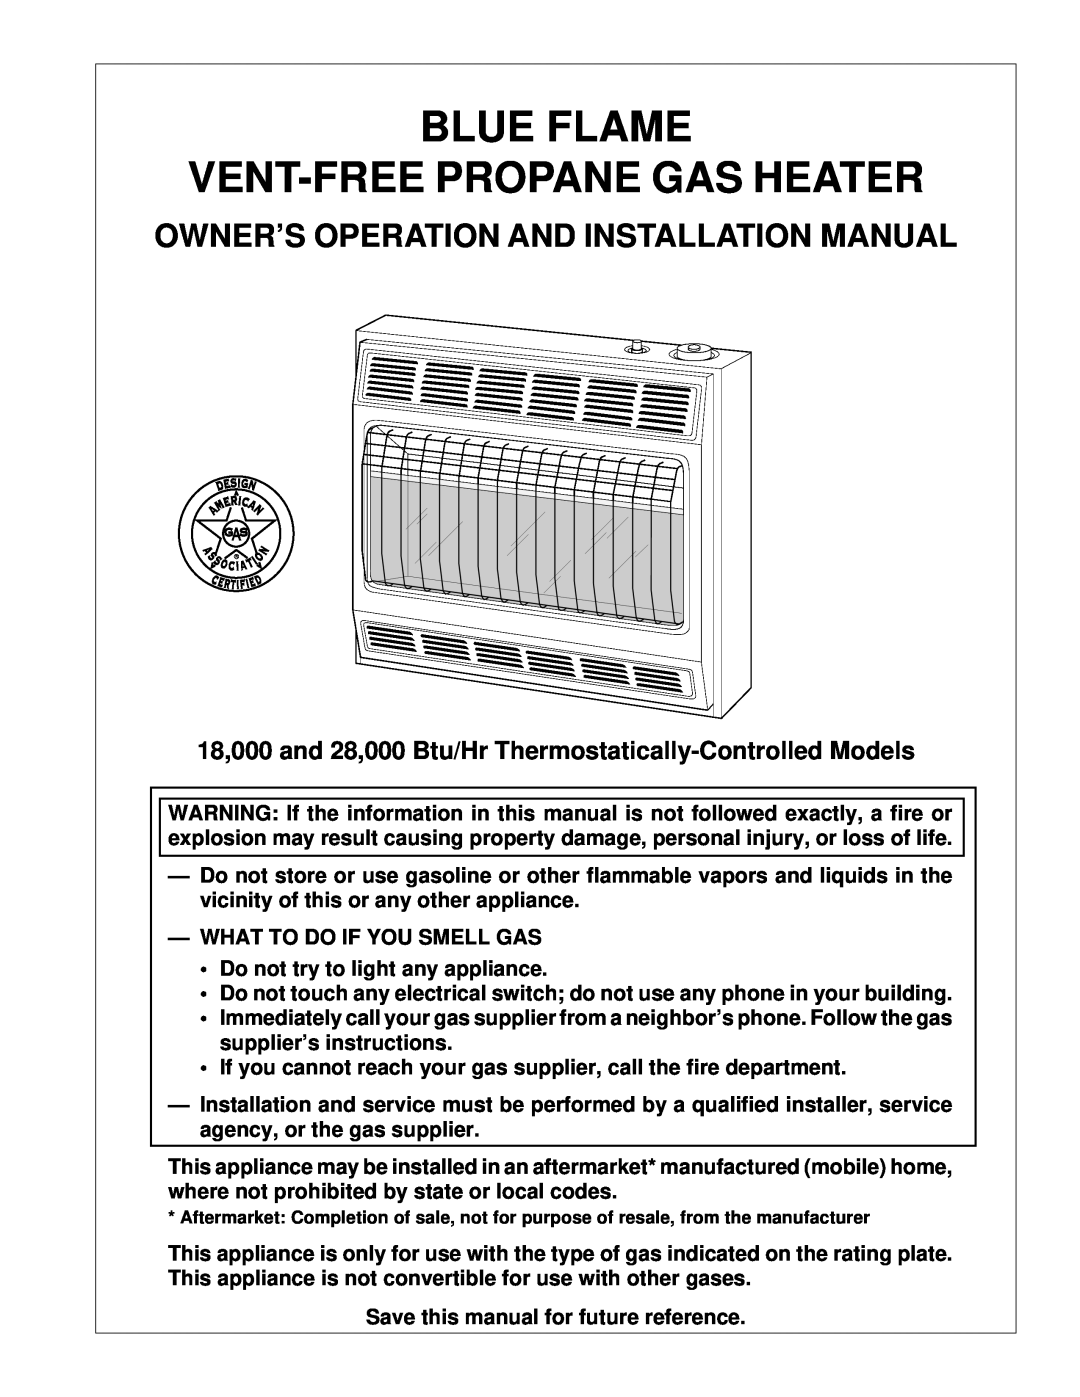 Desa 101811-01C.pdf installation manual Owner’S Operation And Installation Manual, Blue Flame Vent-Freepropane Gas Heater 